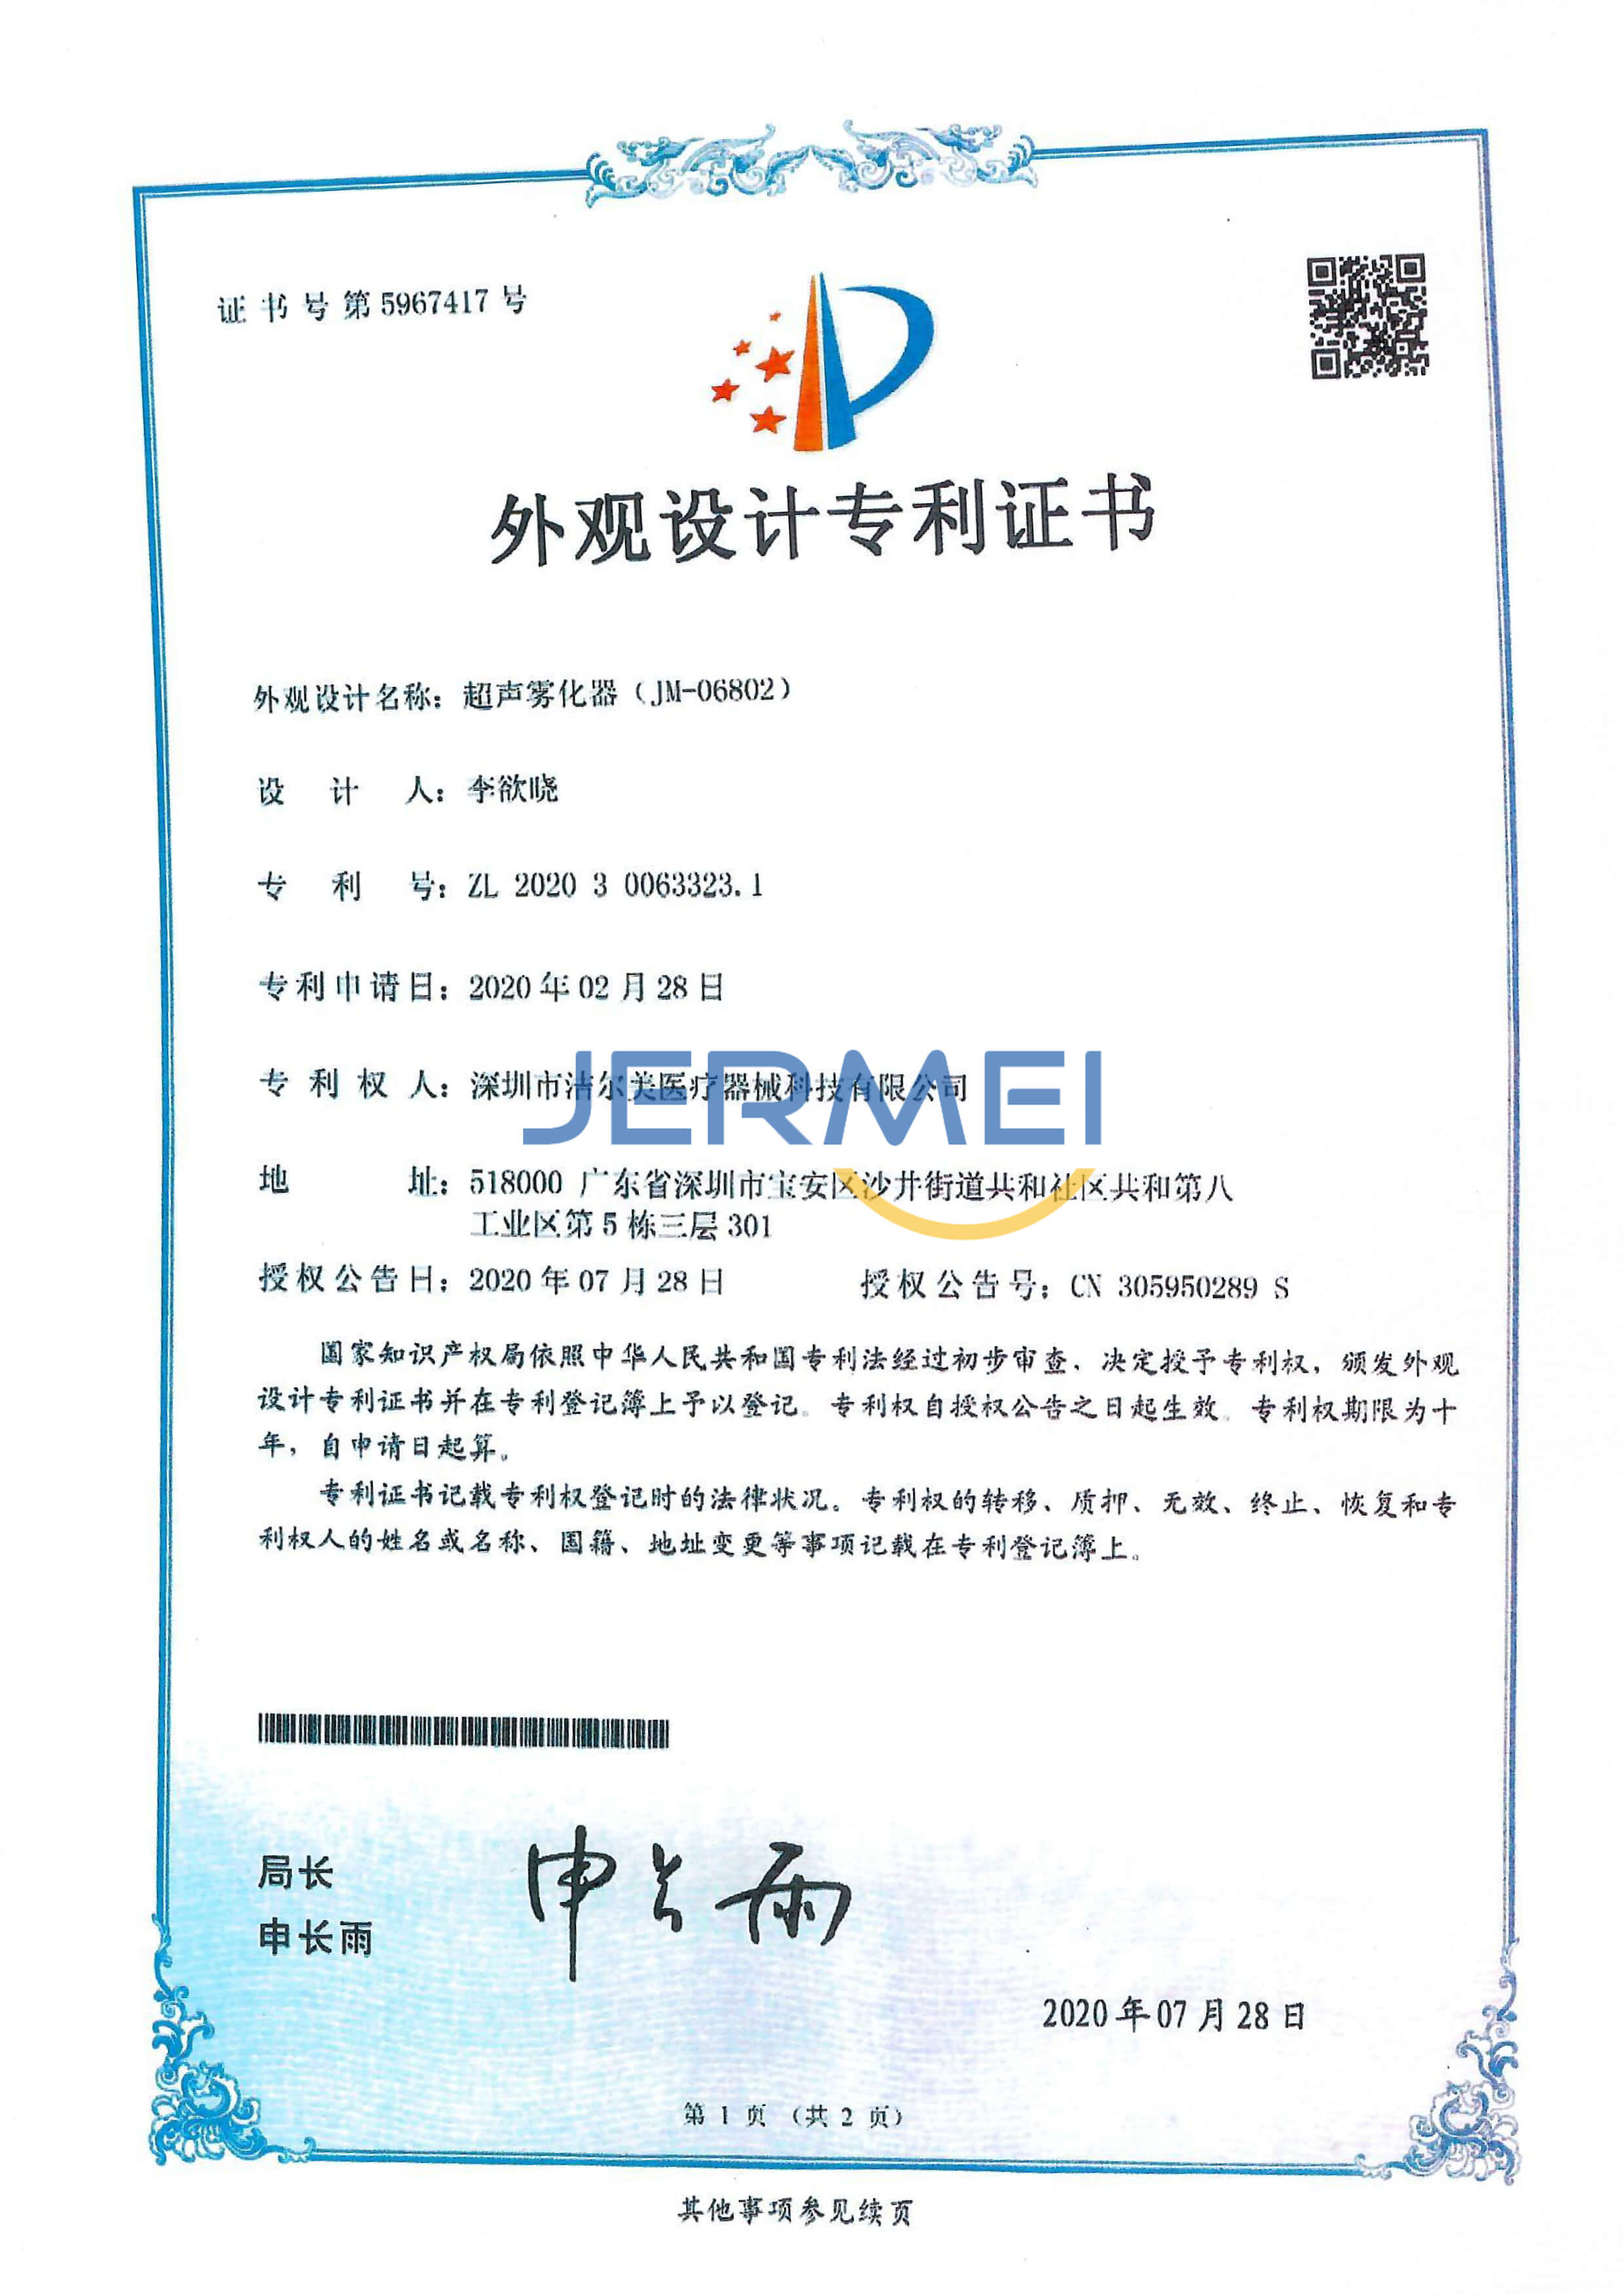 Atomizer certificate (2)